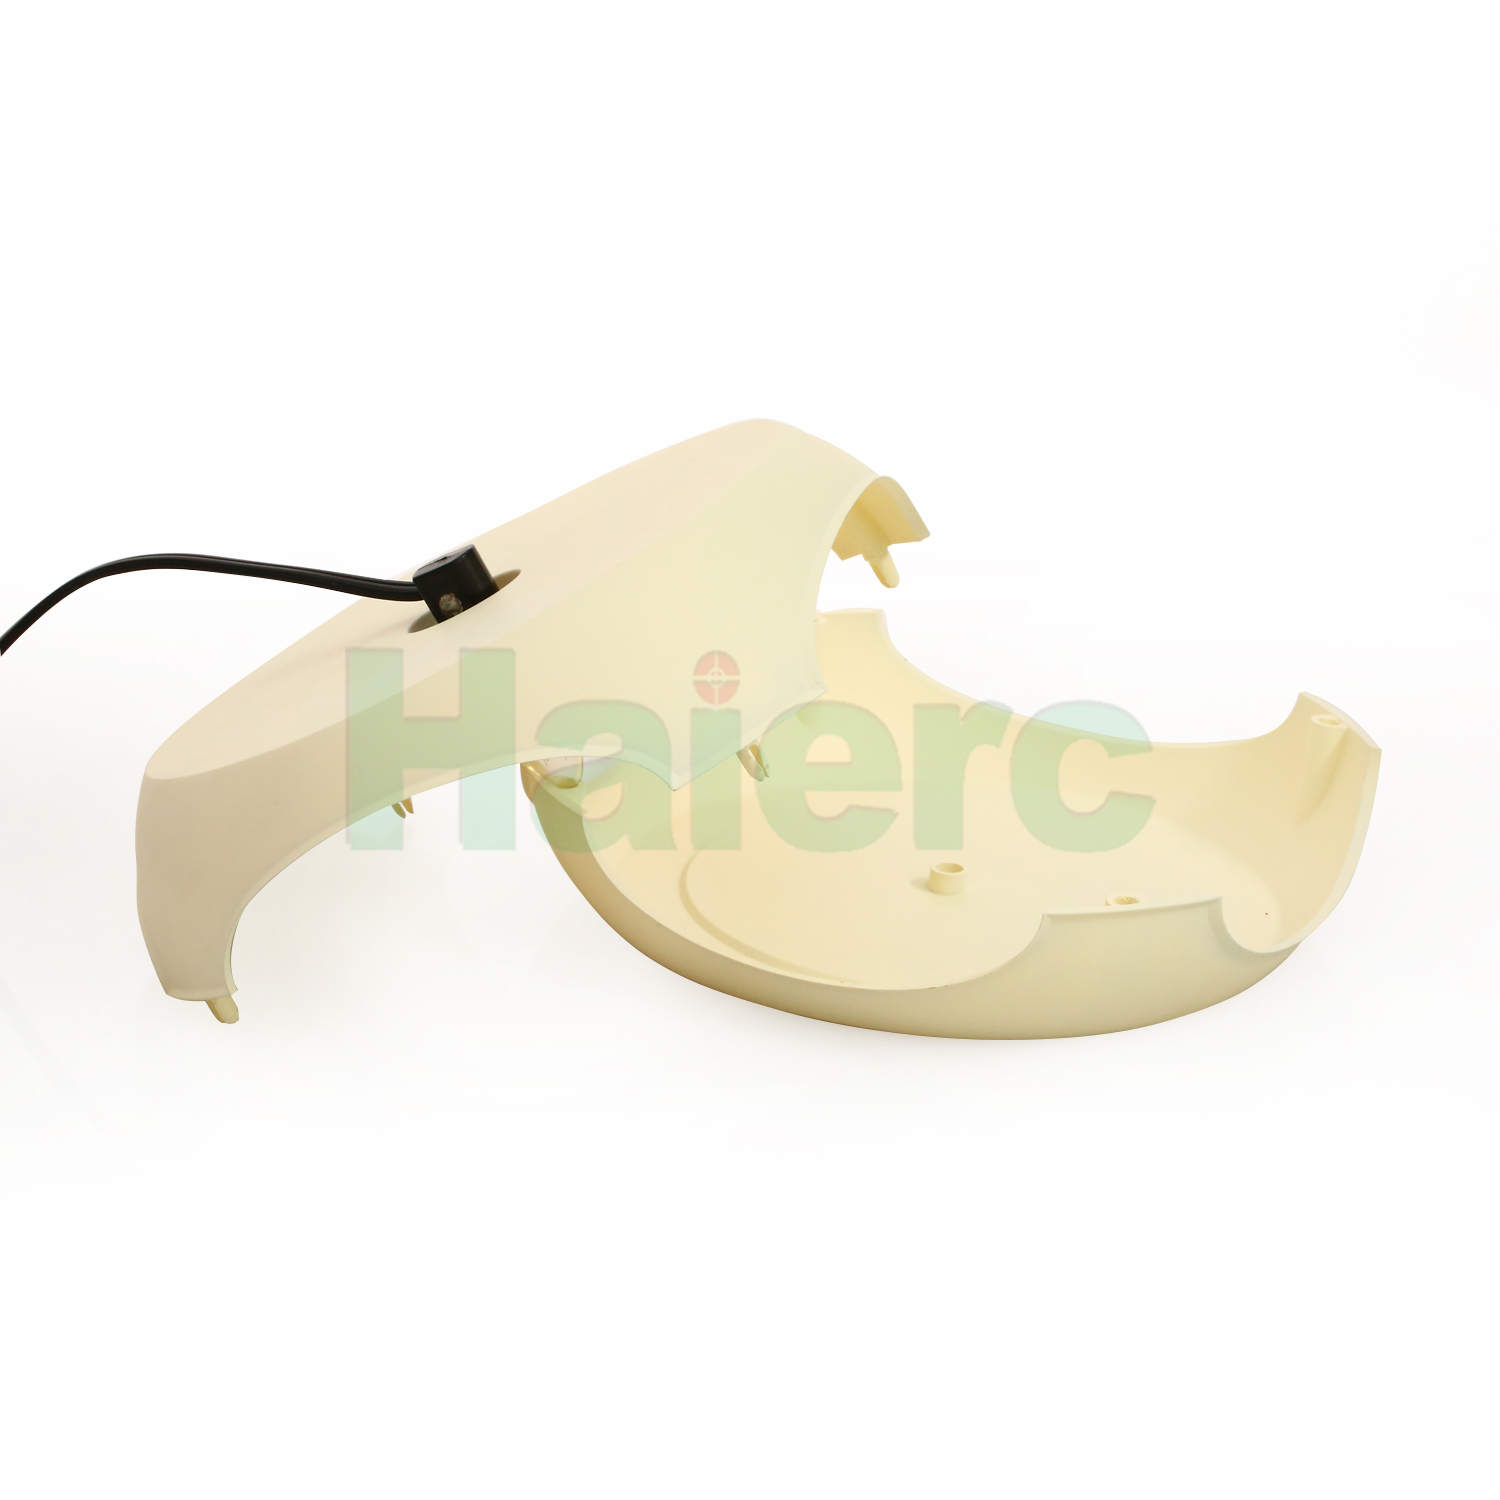 Haierc Eco-friendy Flea Trap Lamp/Bed Bug Trap HC4614